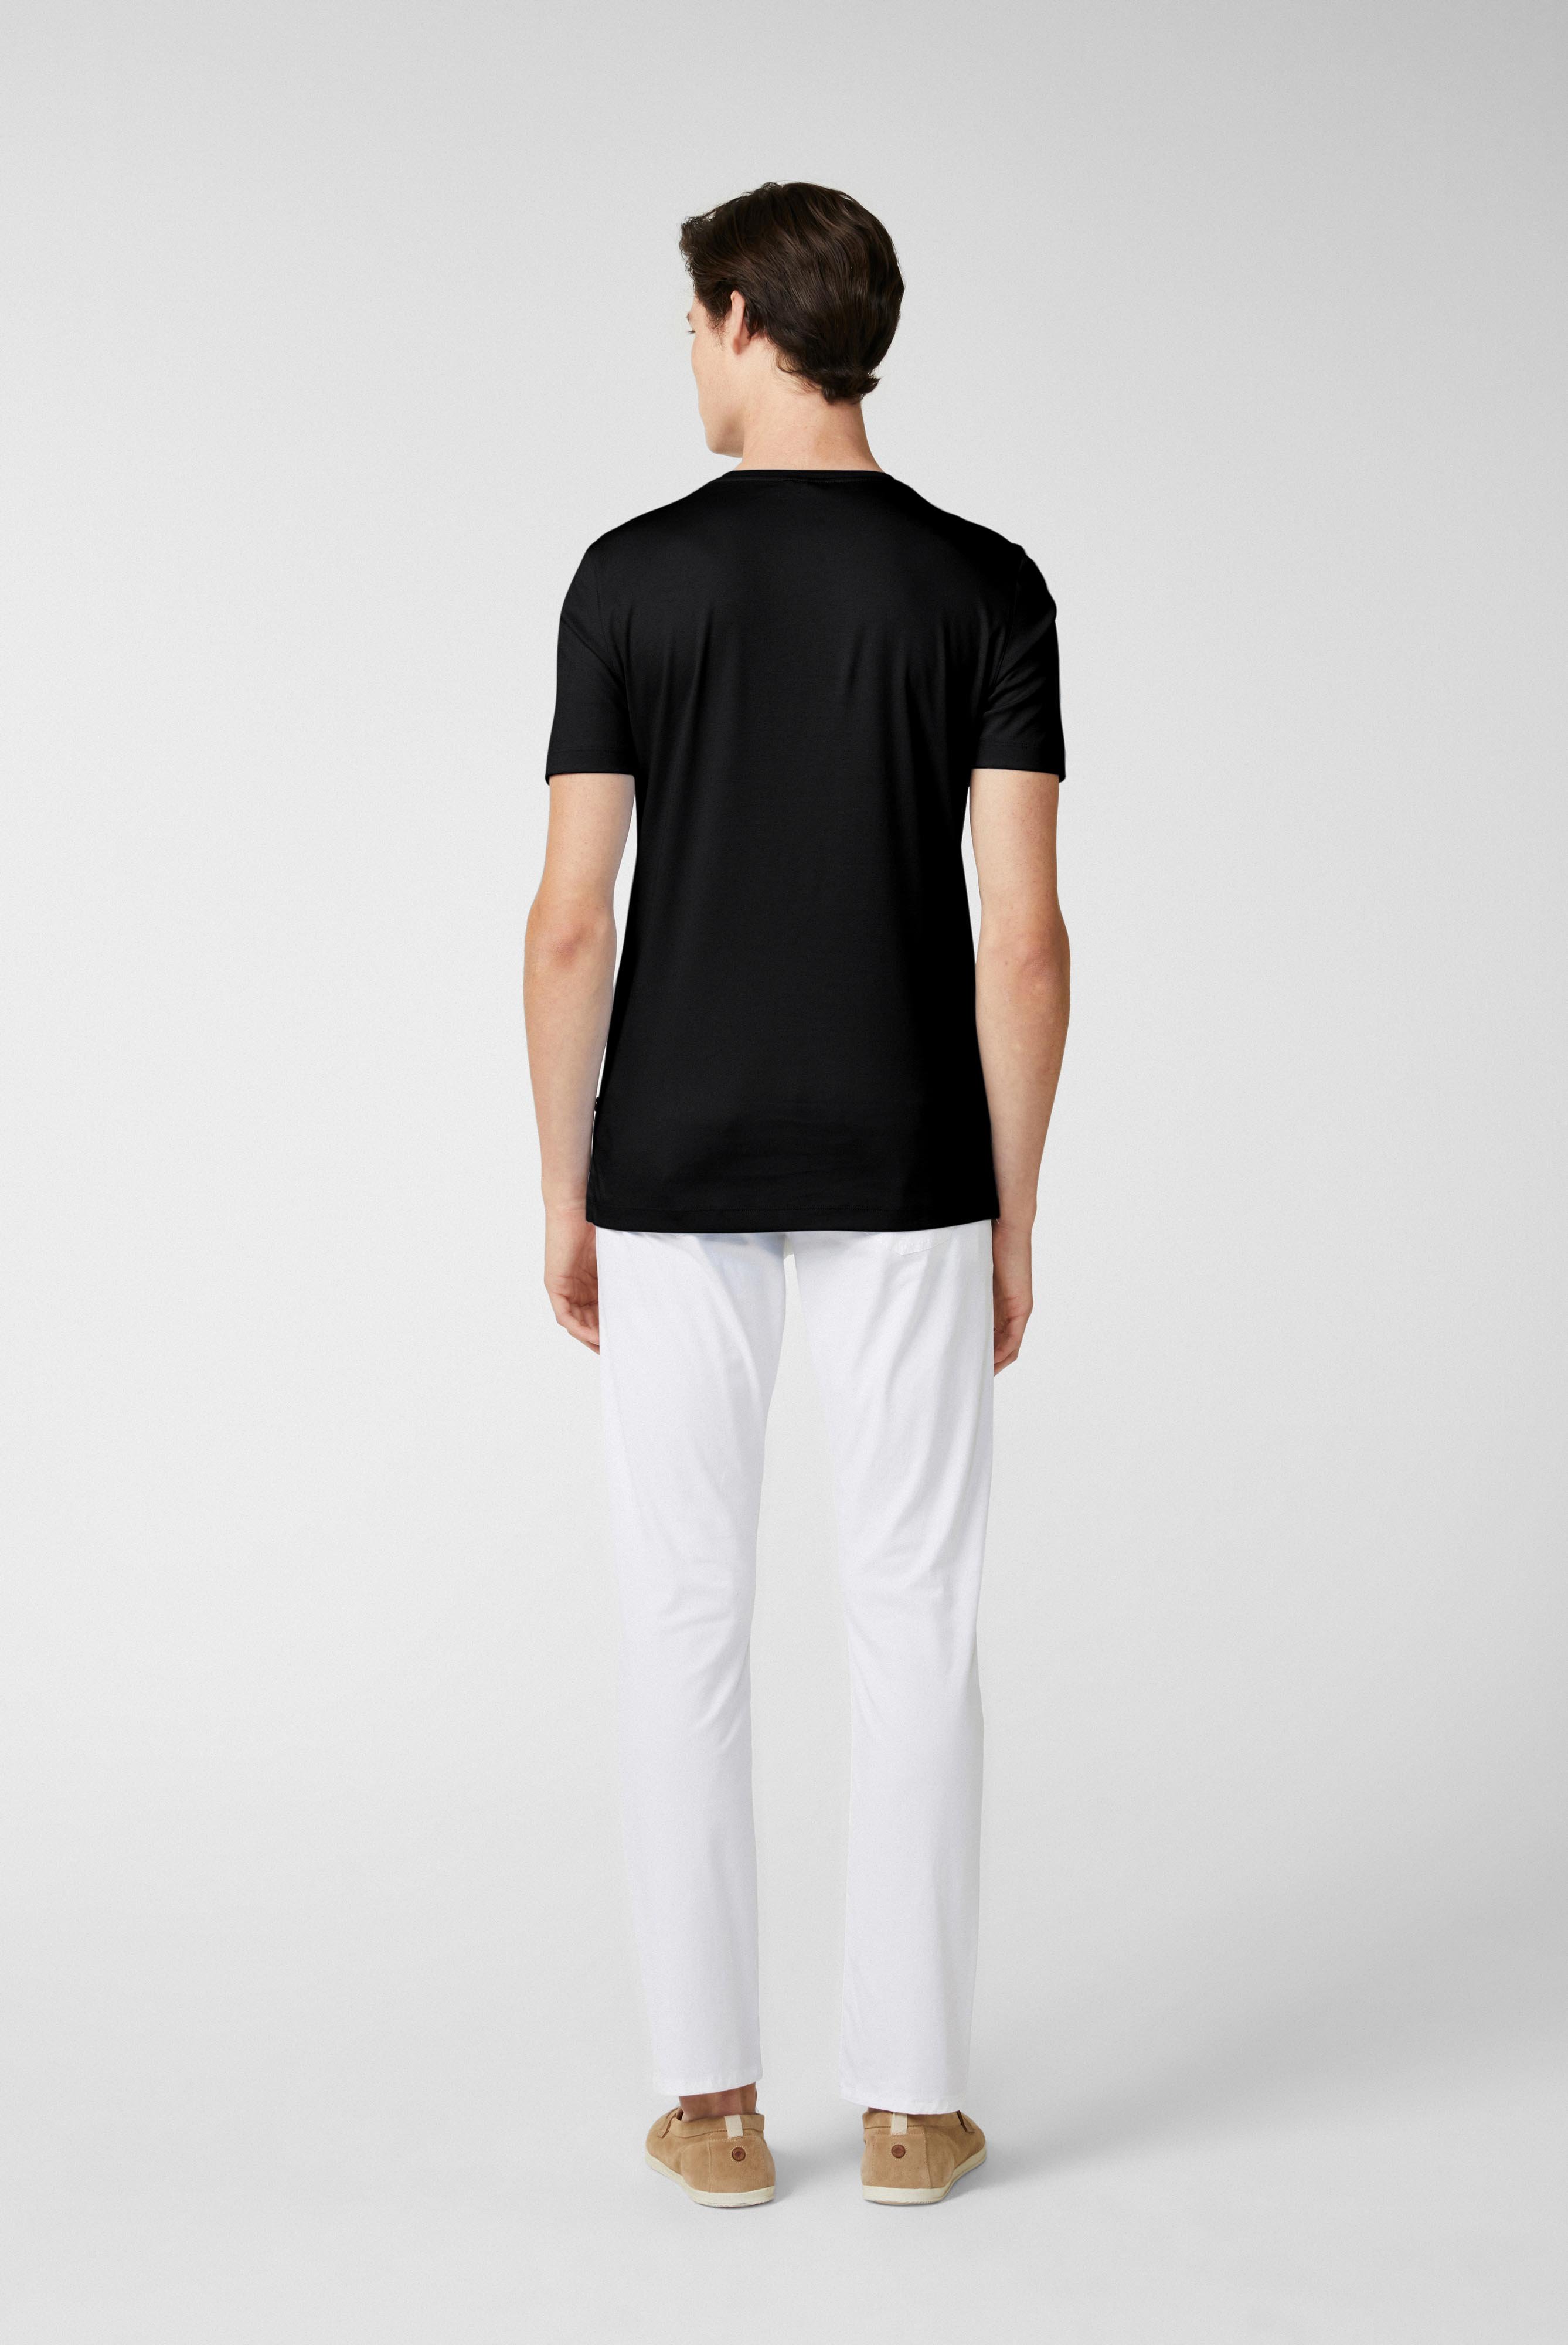 T-Shirts+Rundhals Jersey T-Shirt Slim Fit+20.1717.UX.180031.099.L